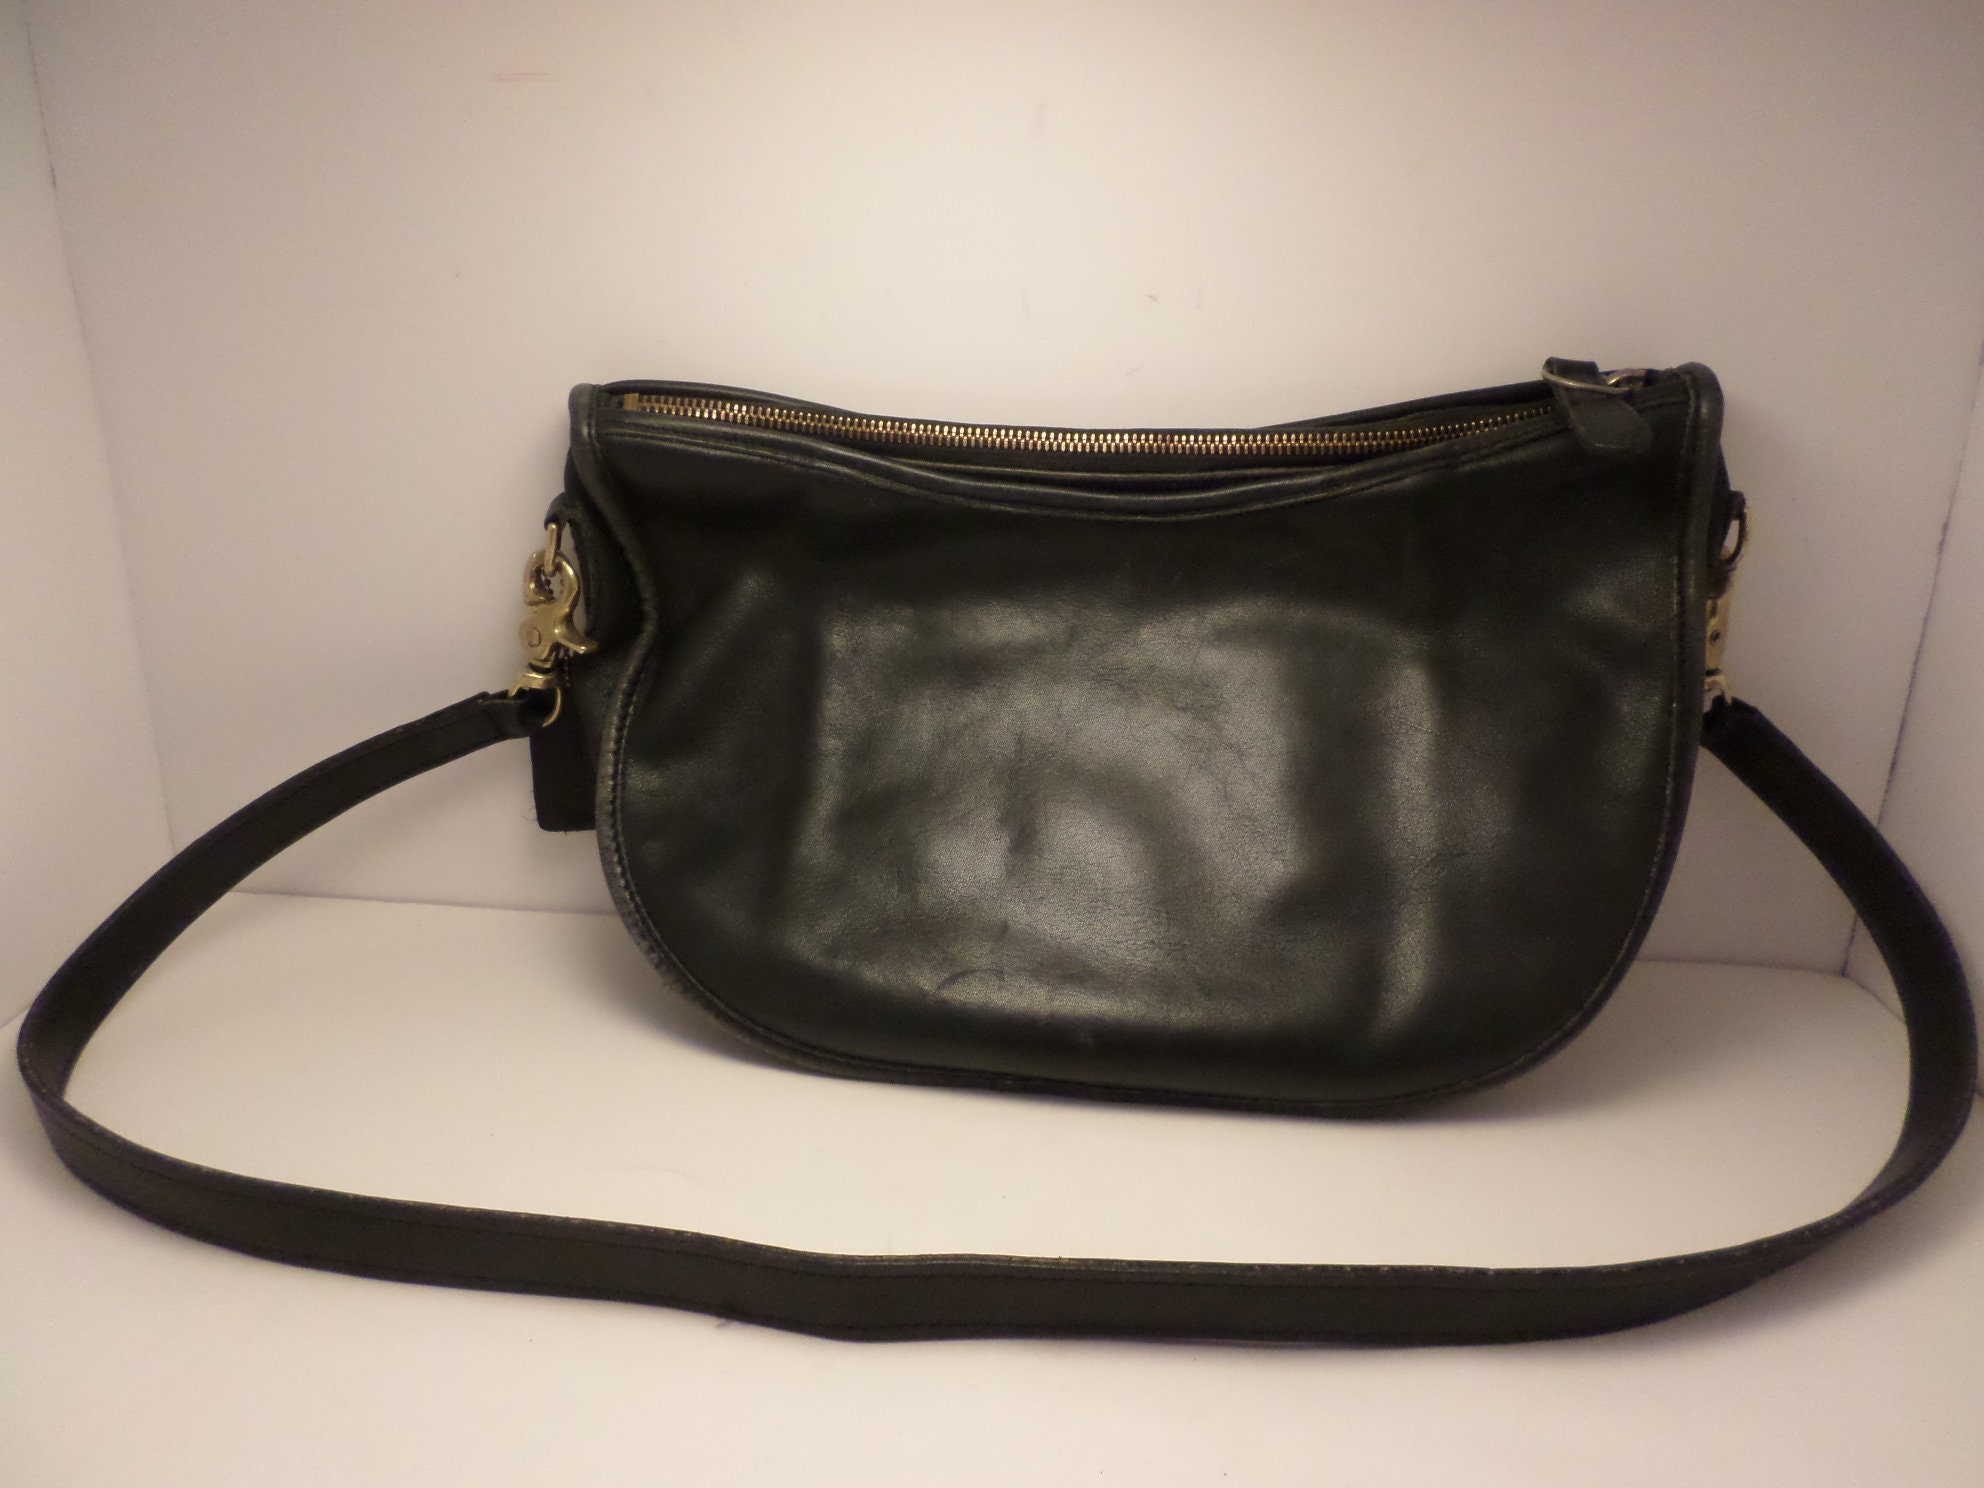 Vintage 80's Coach purse great shape beaded taglet black leather